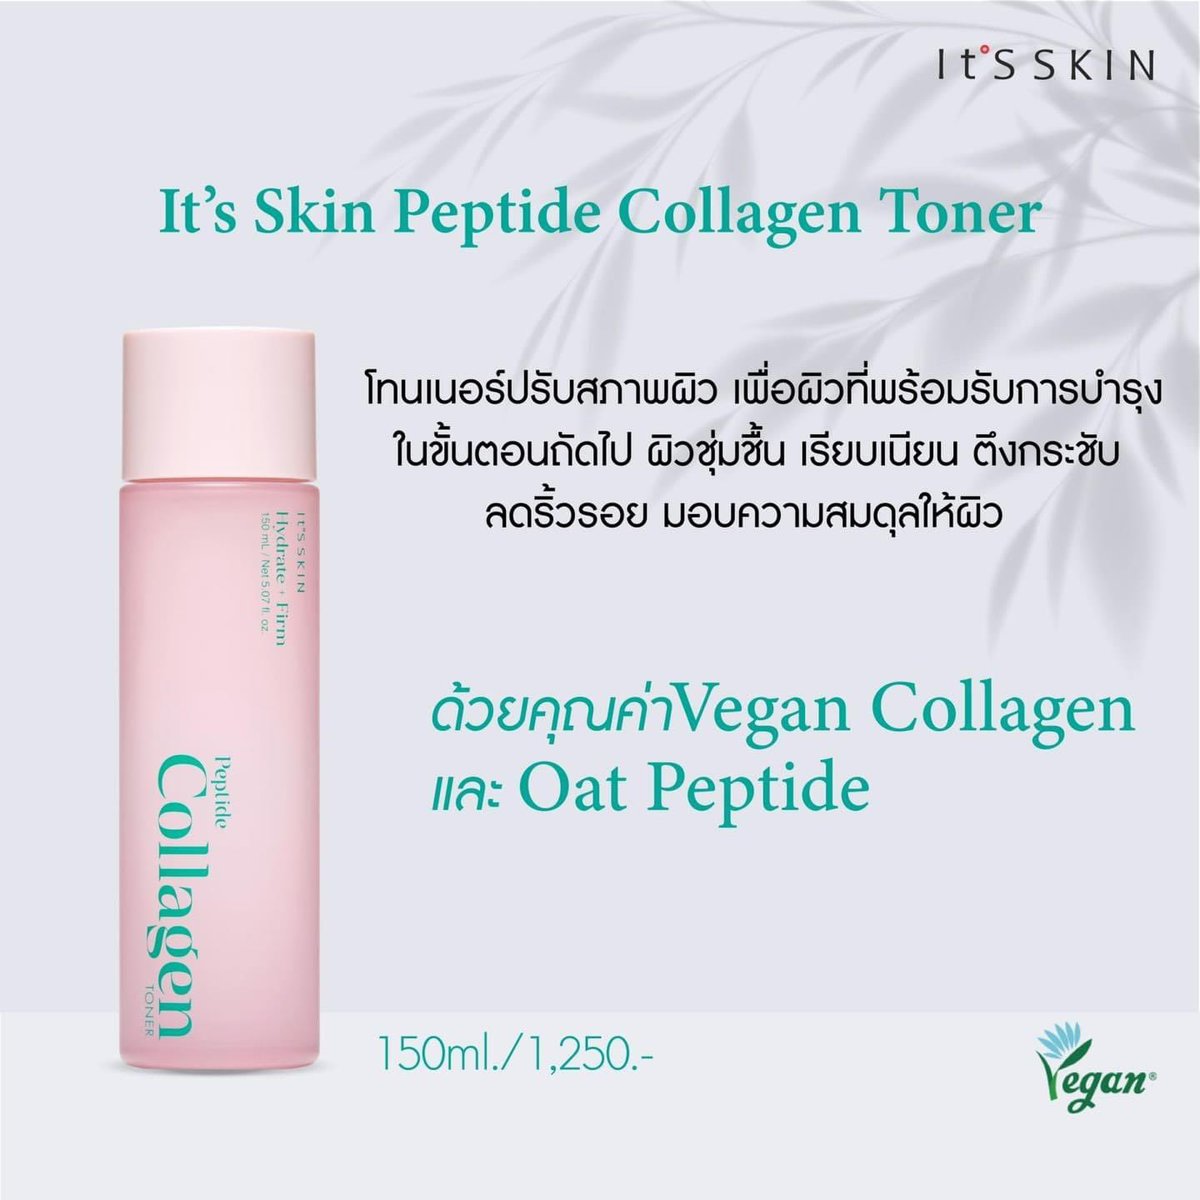 (wts/ขาย)it’s skin peptide collagen แยกชิ้นละ 💌 500 บาทรวมส่ง set cleansing foam & toner (150ml) ราคา 1,000 (ลดจาก 2,240) สนใจ dm ได้เลยน้า มือหนึ่งค่ะ #ส่งต่อเครื่องสำอางค์ #ส่งต่อเครื่องสำอาง #ส่งต่อคสอ #ส่งต่อสกินแคร์ #สกินแคร์ #itsskin #คสอเกาหลี #ใช้ดีบอกต่อ